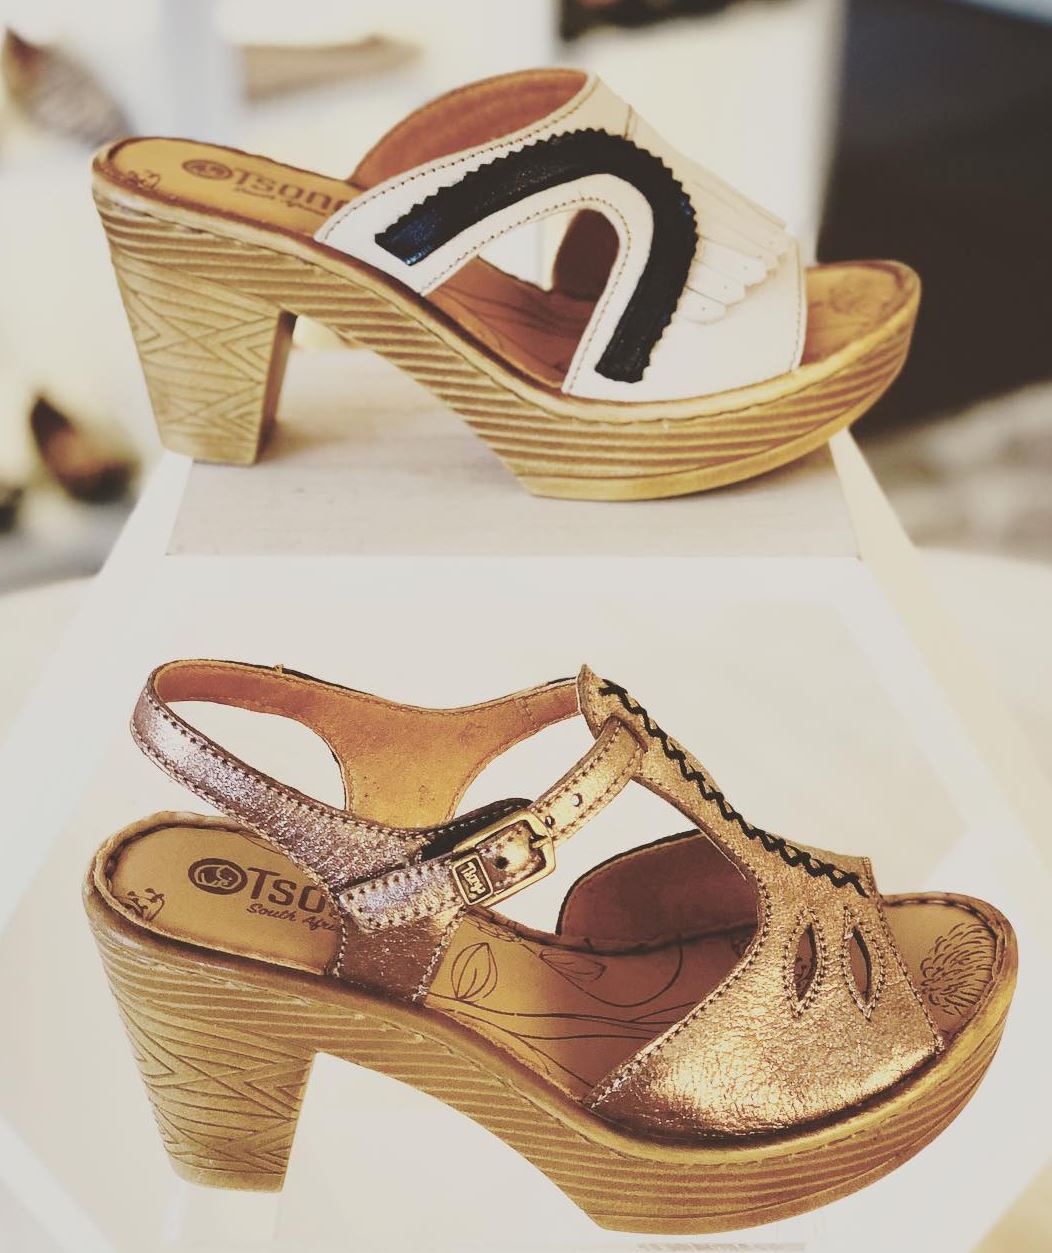 Tsonga shoes - African style